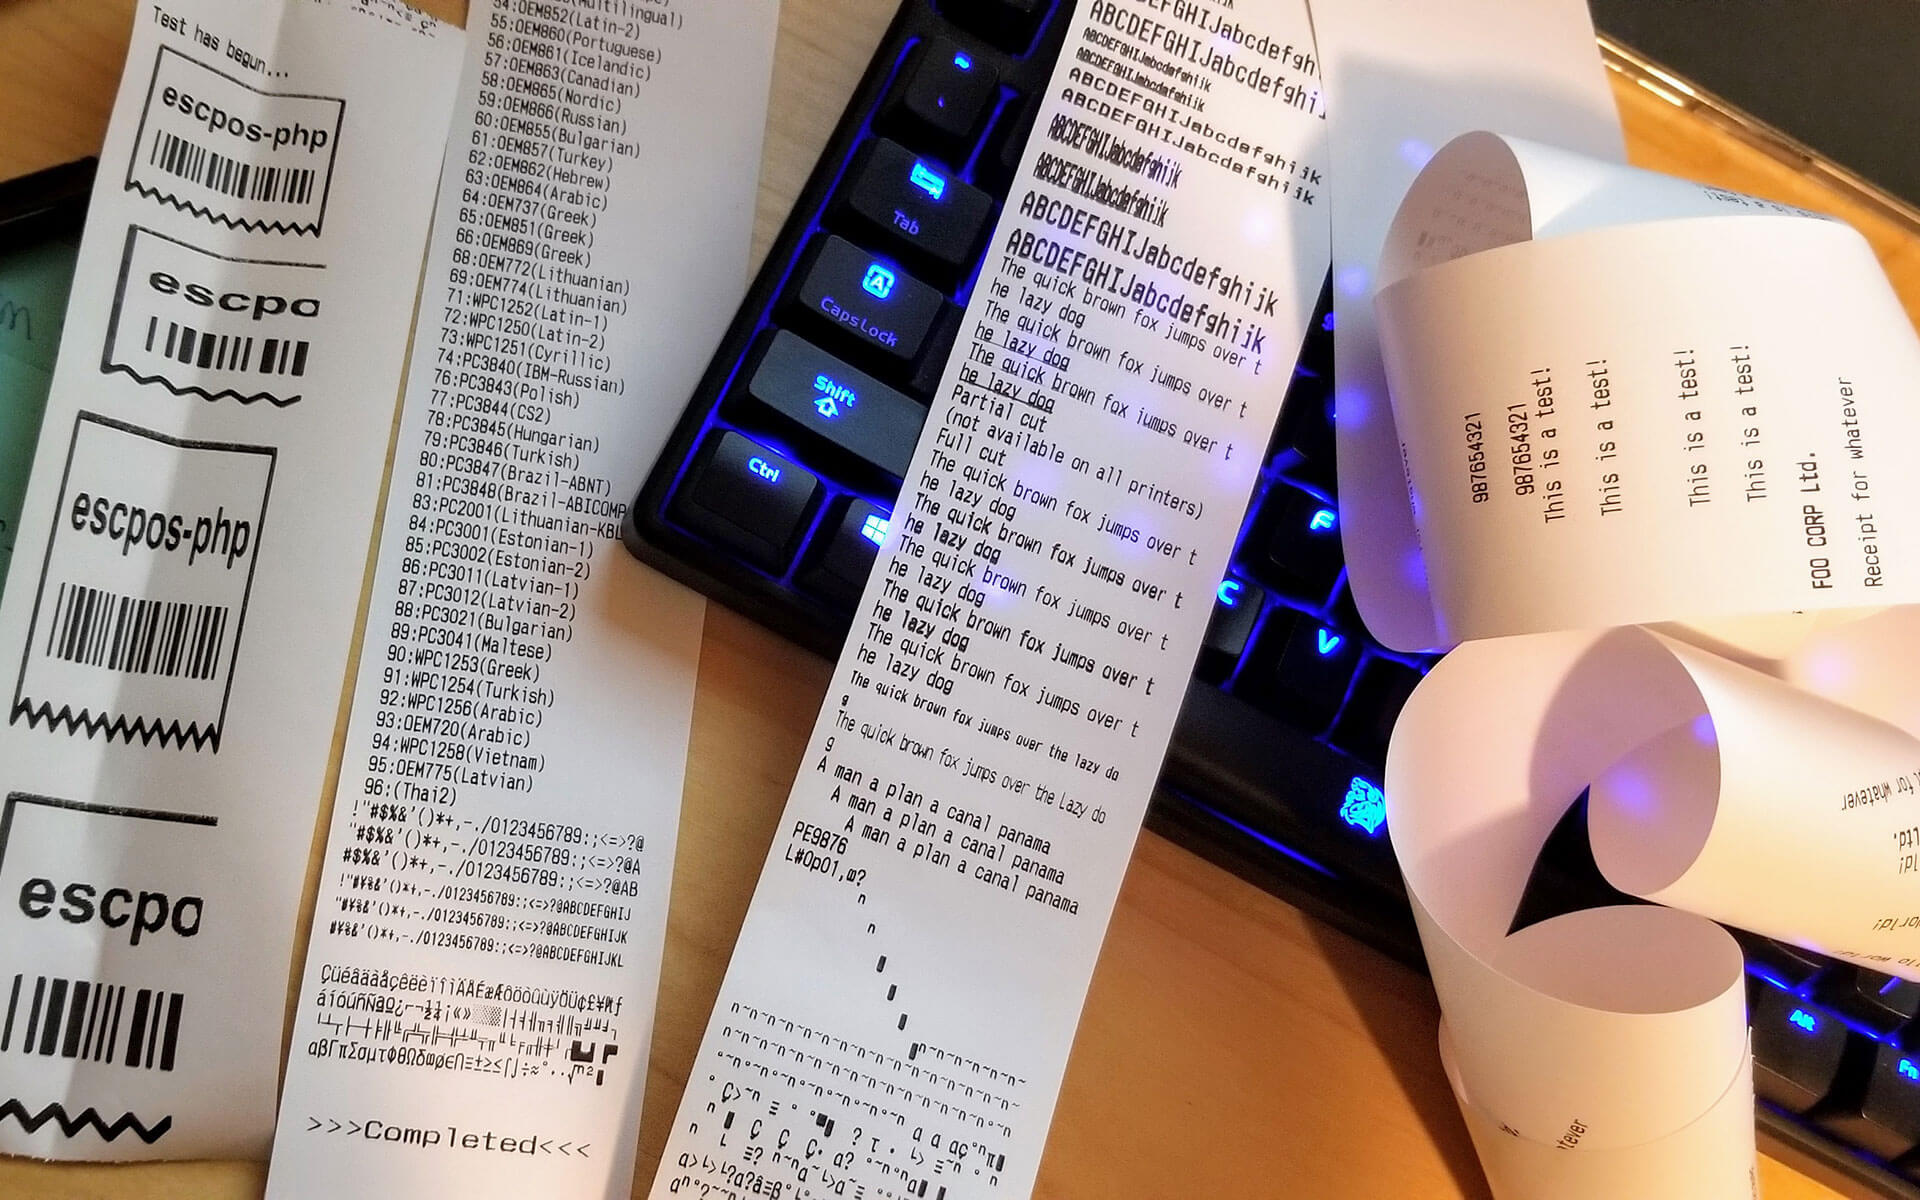 Test printouts on receipt paper strewn on a desk